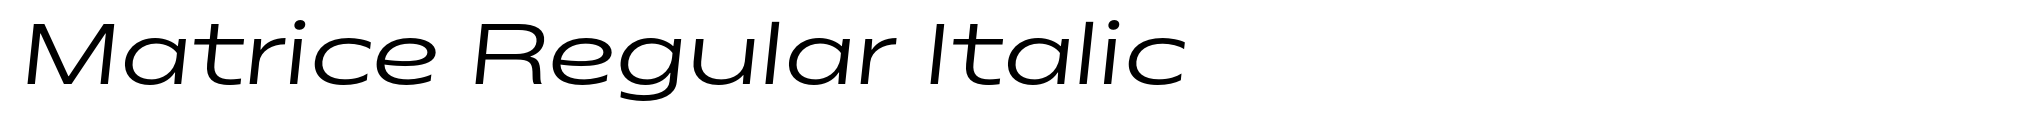 Matrice Regular Italic image